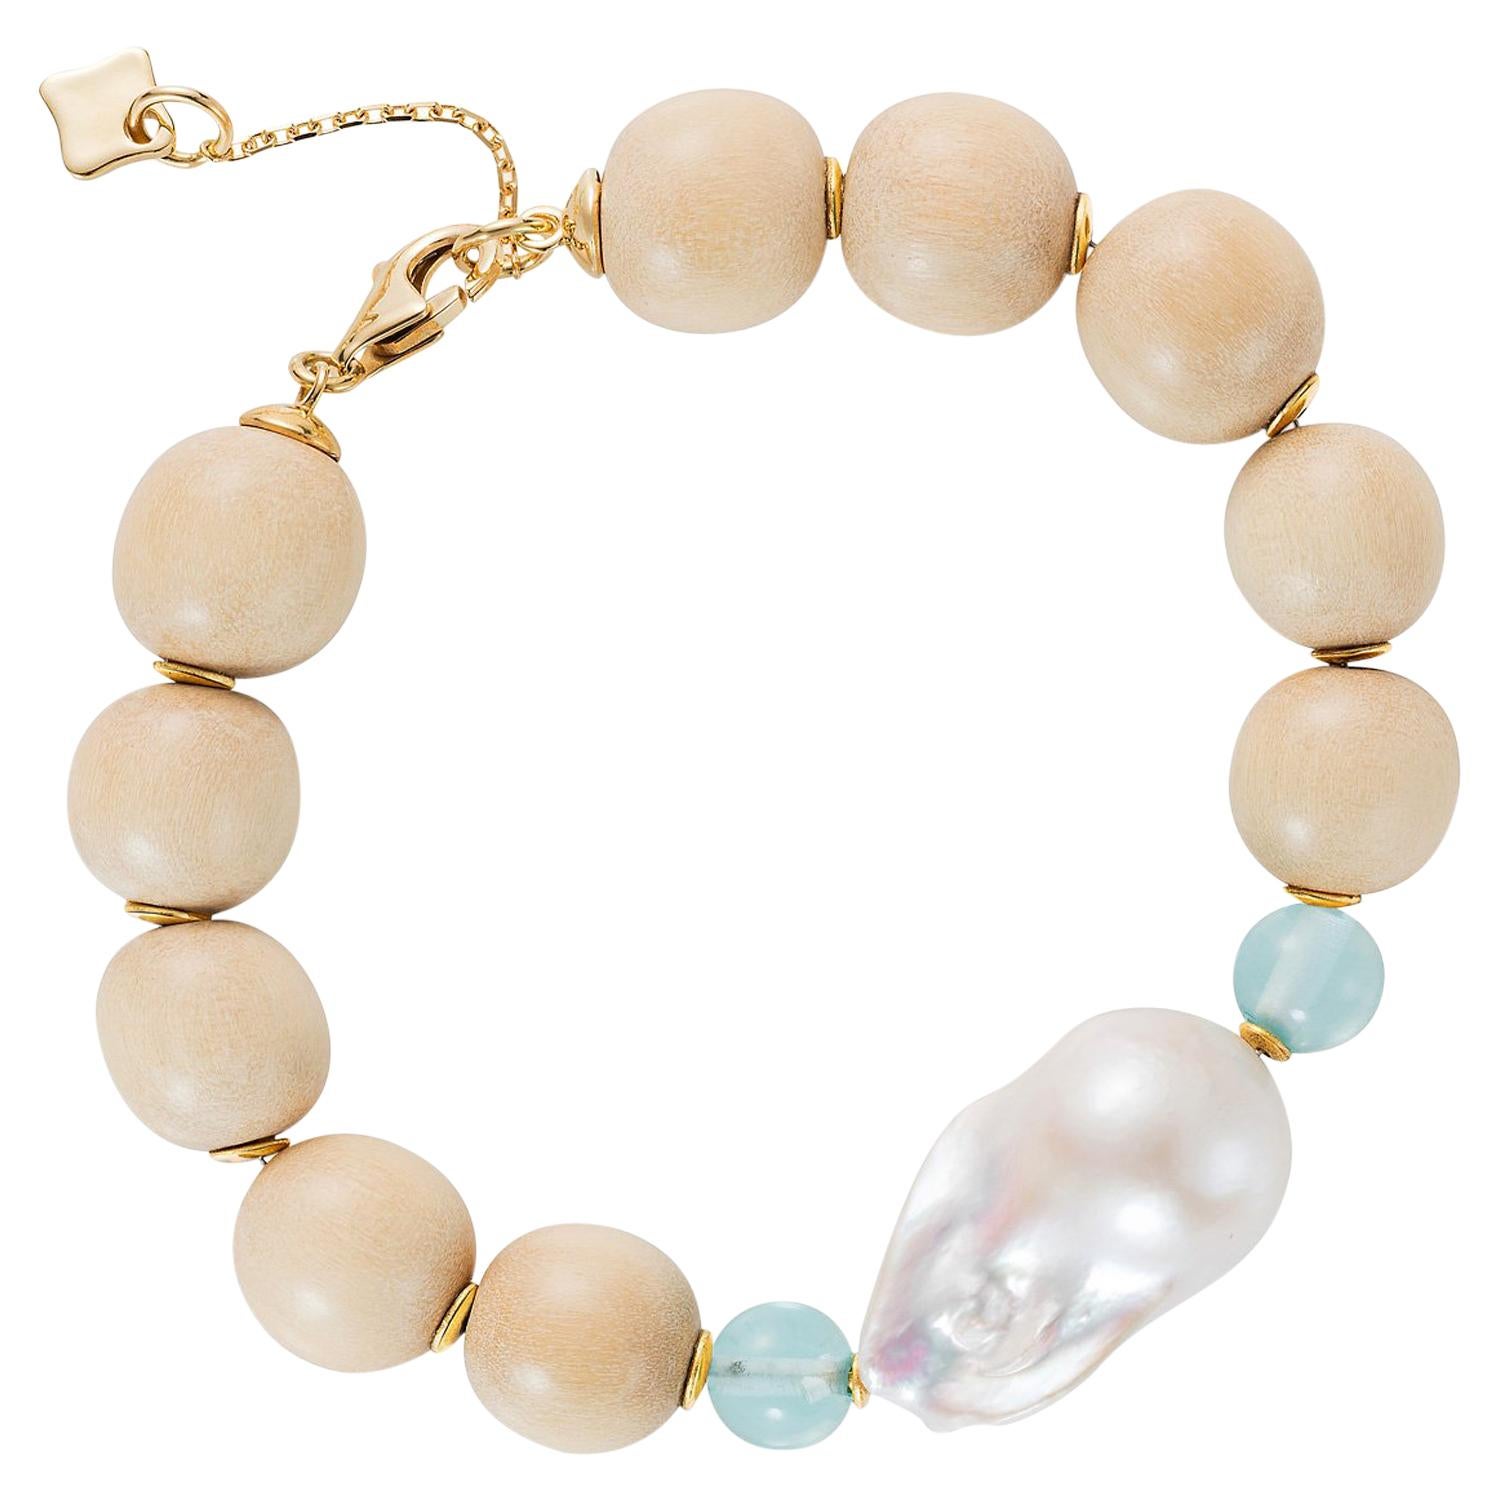 MAVIADA's Modern Wooden Bracelet with 18K Gold Discs, Baroque Pearl, Aqua Blue